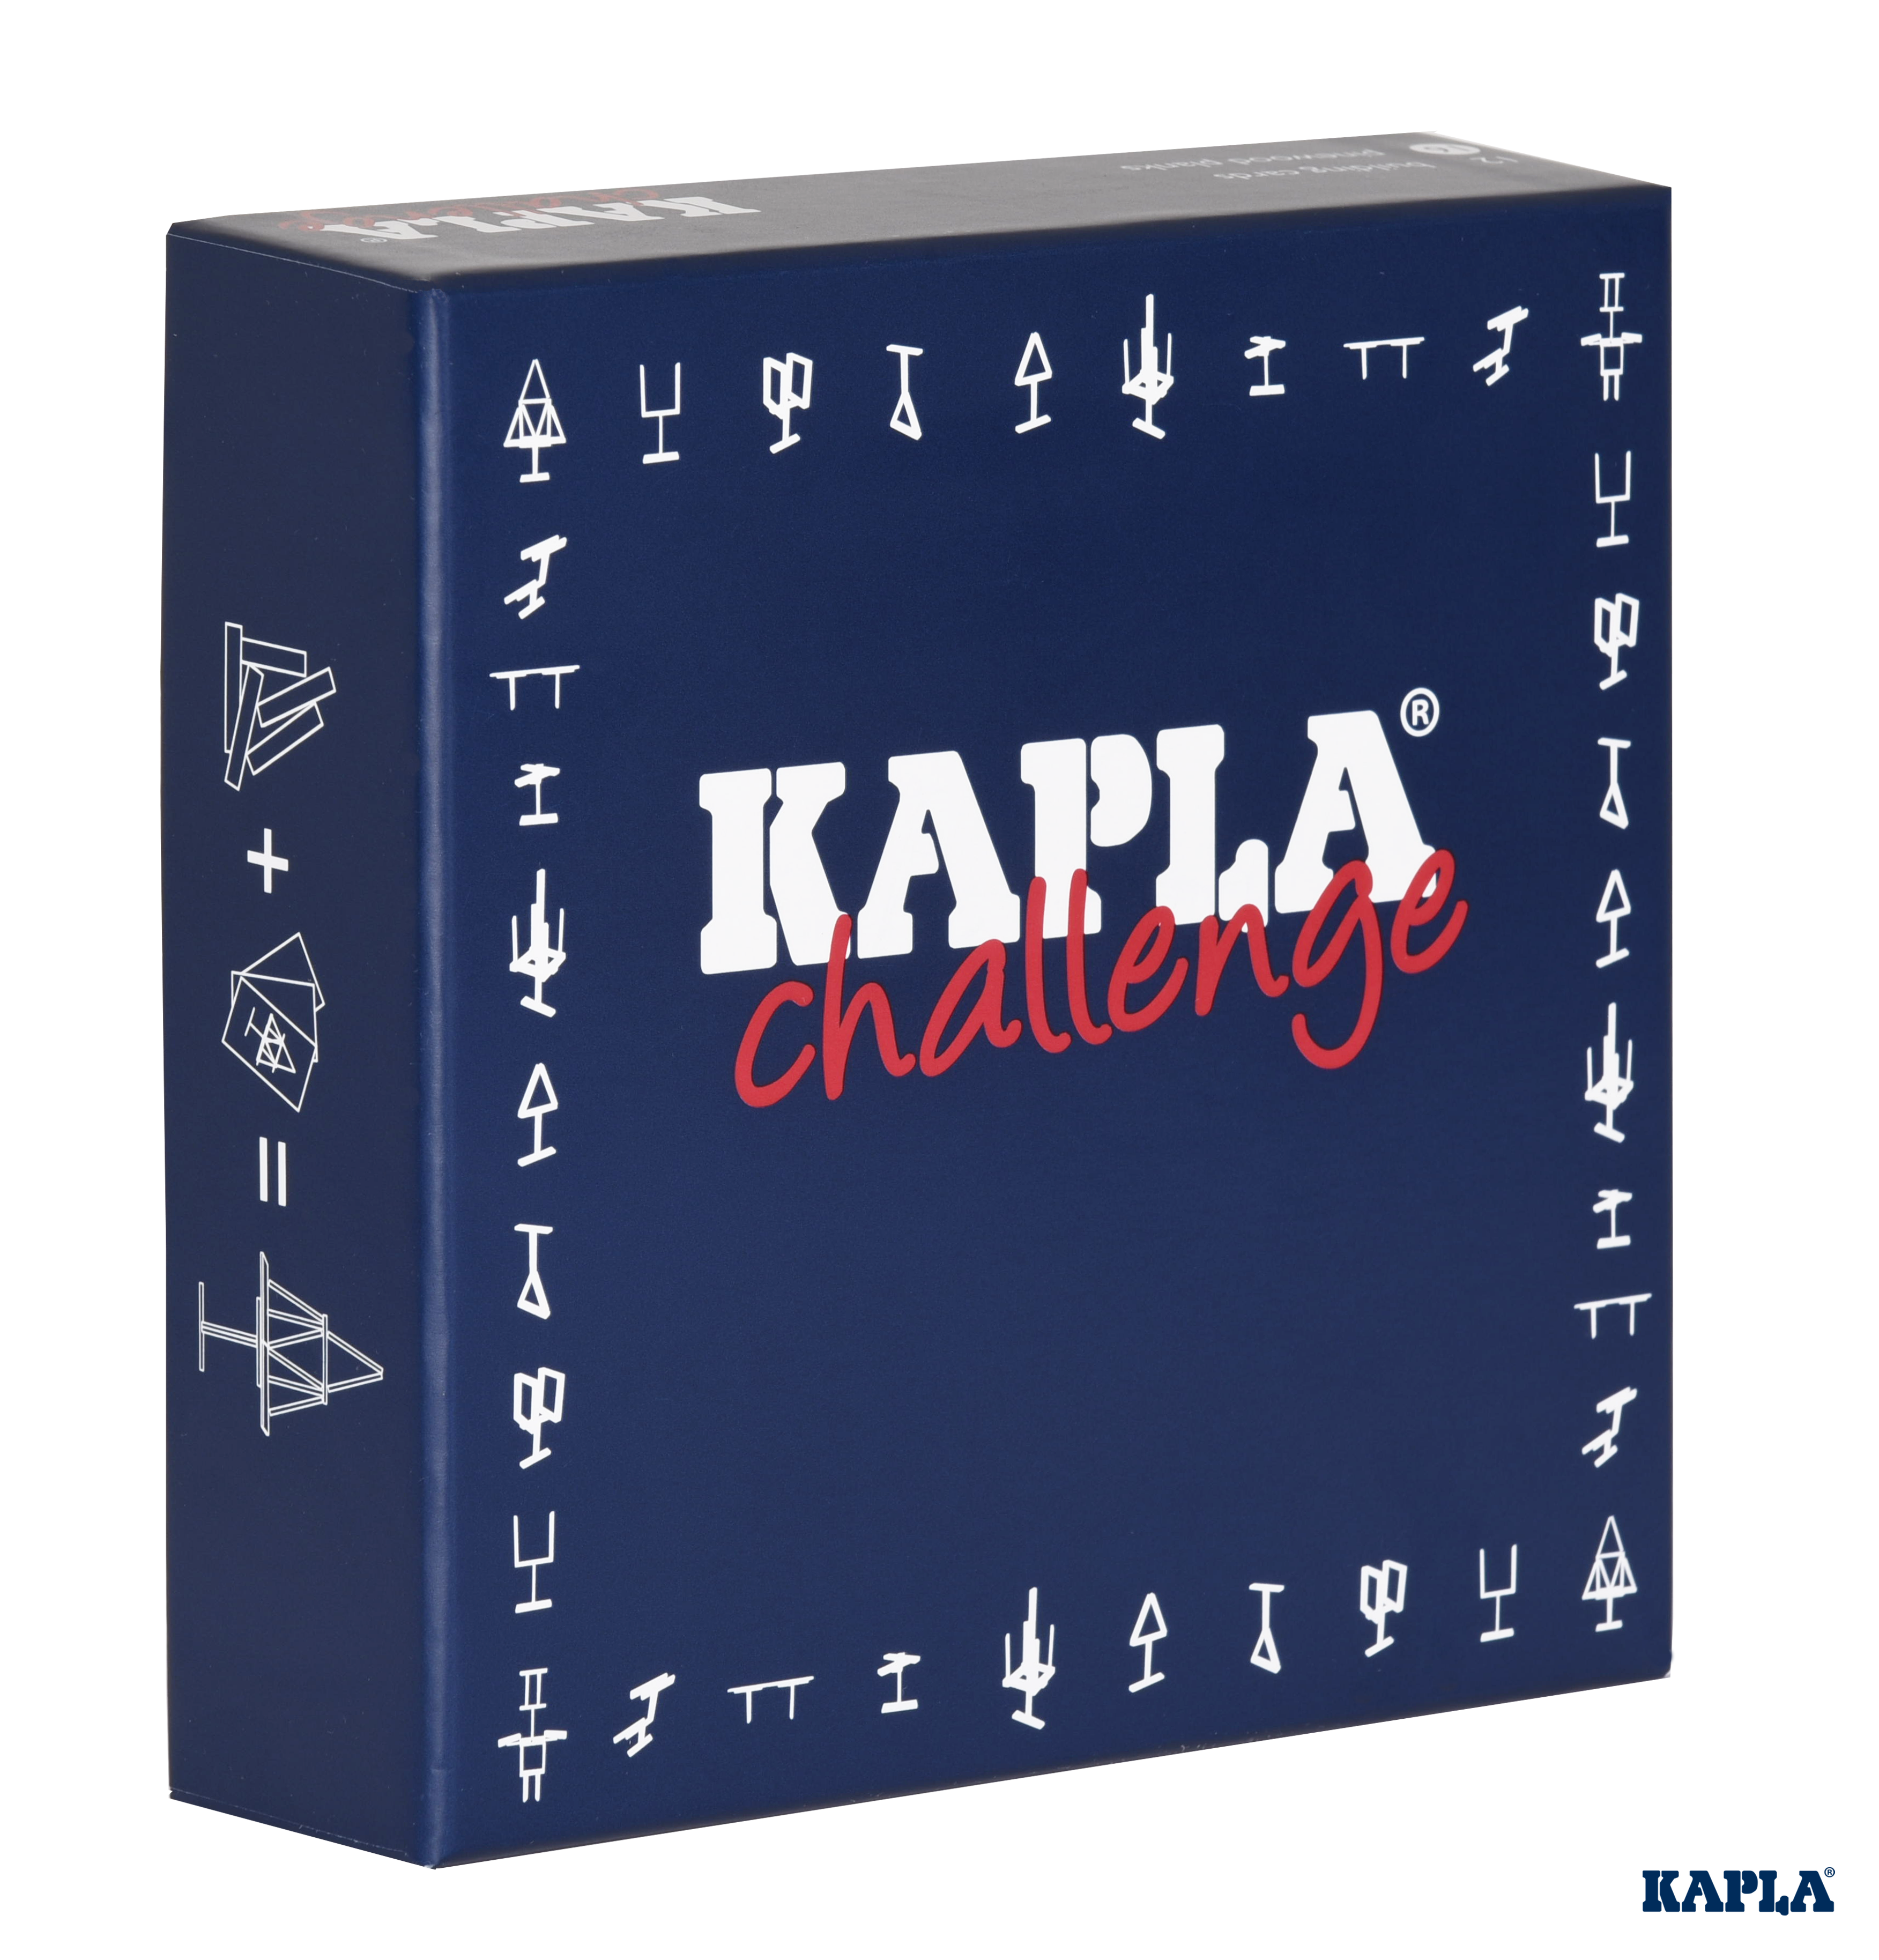 Kapla Challenge Box - Wooden Construction Set